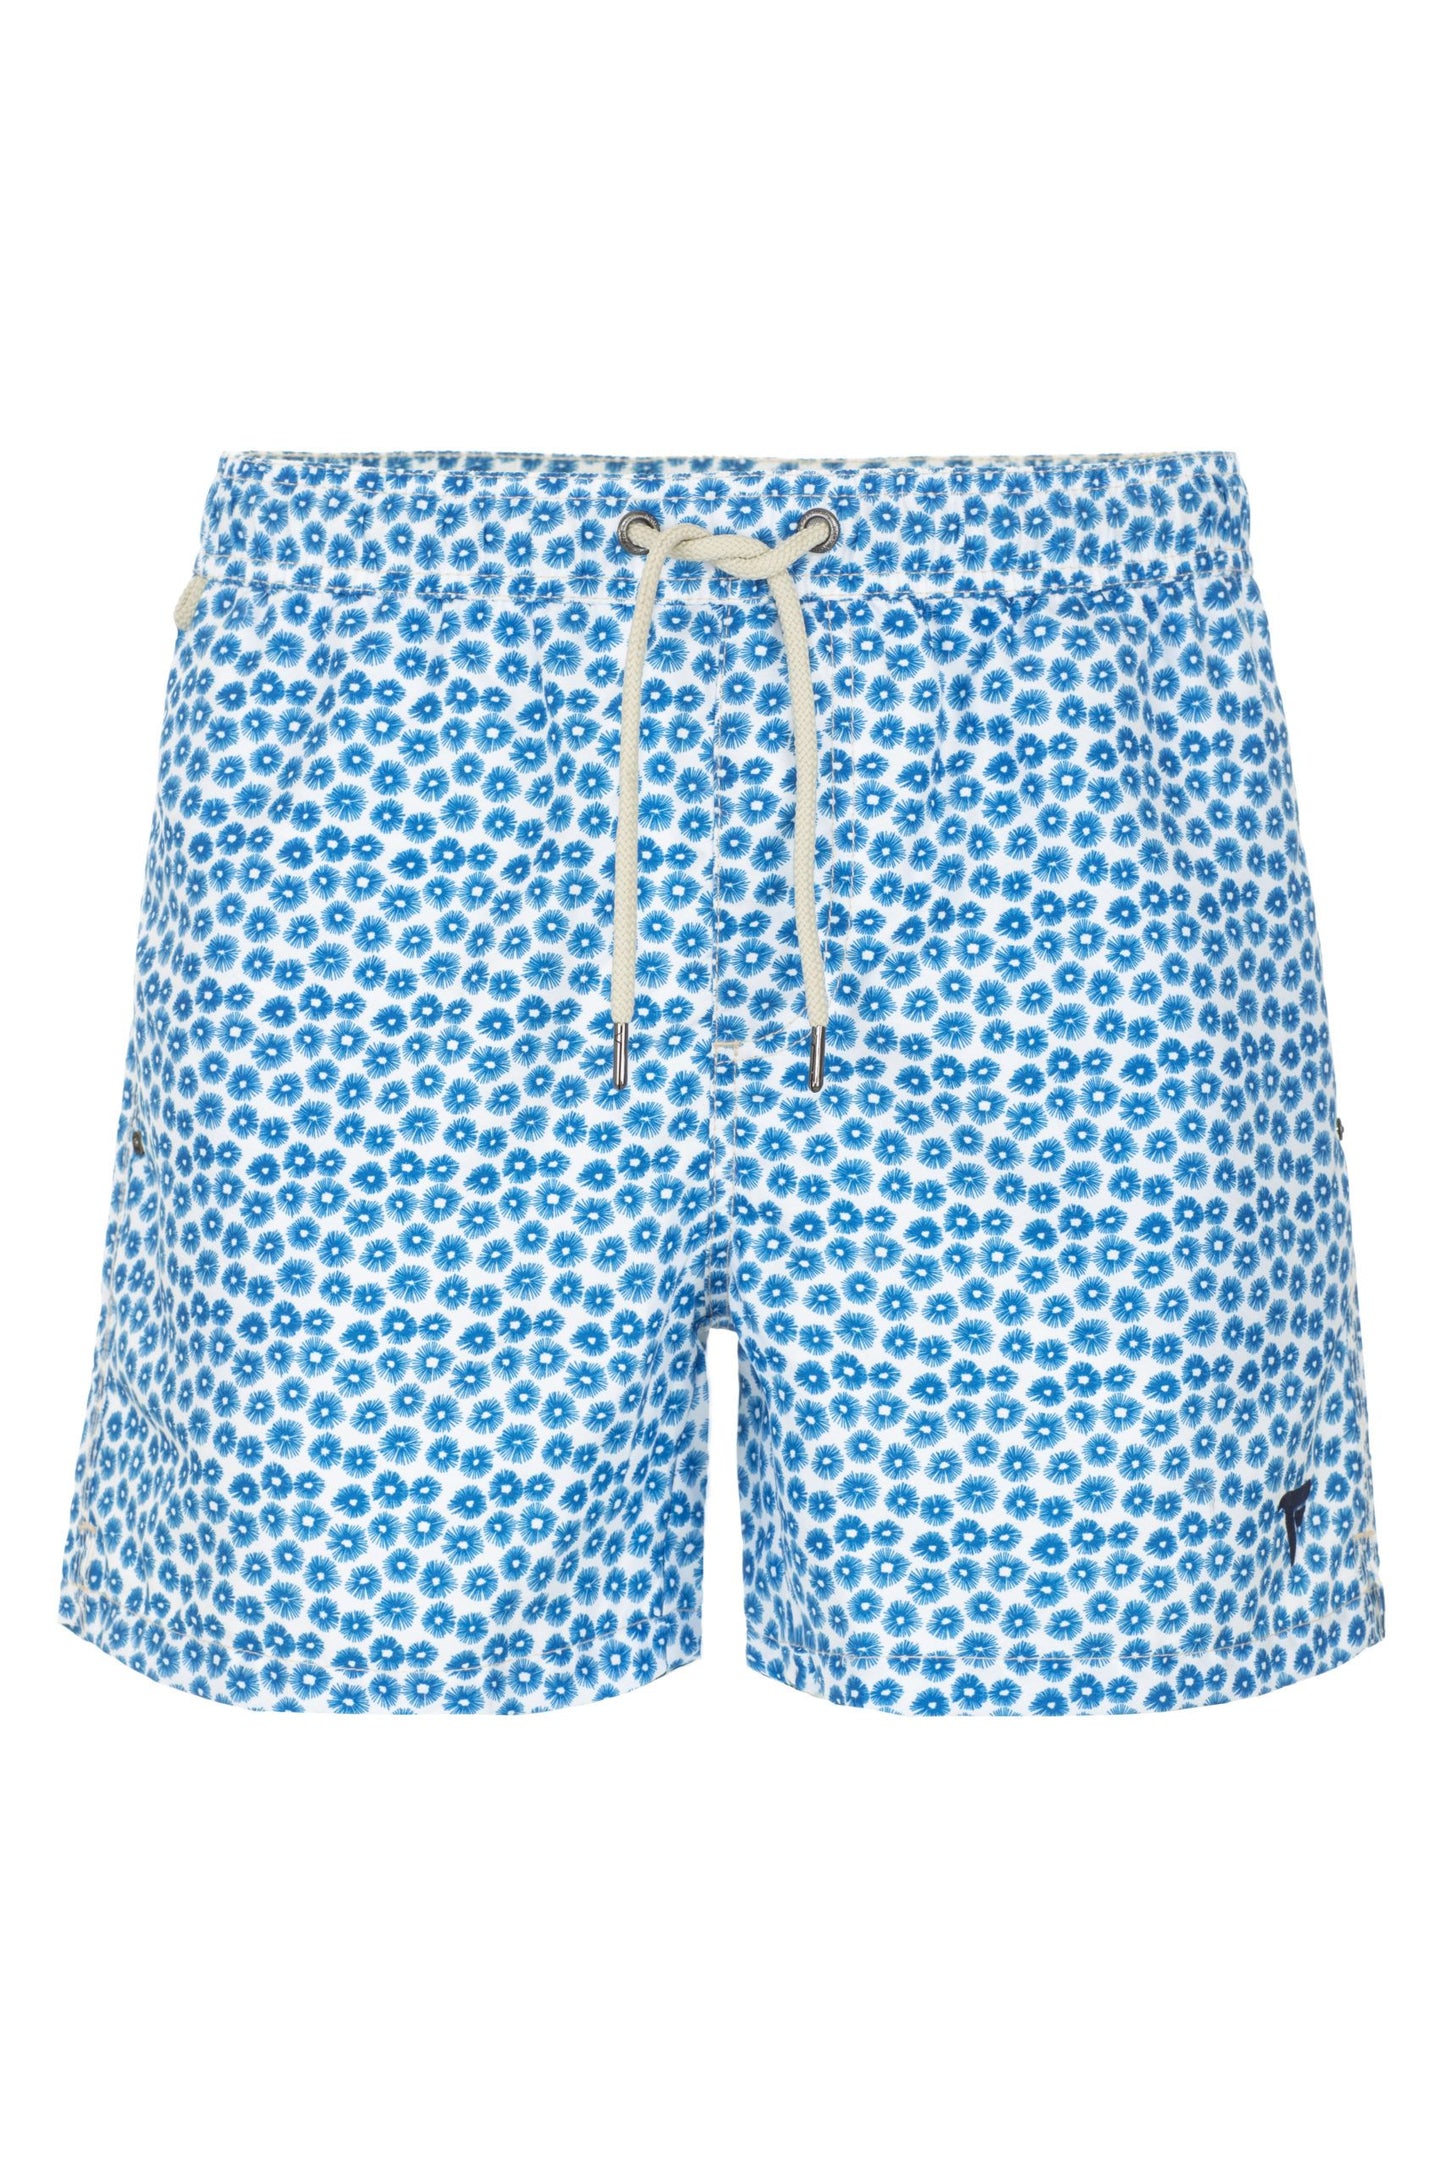 Fred Mello Chic Light Blue Beach Shorts for Men